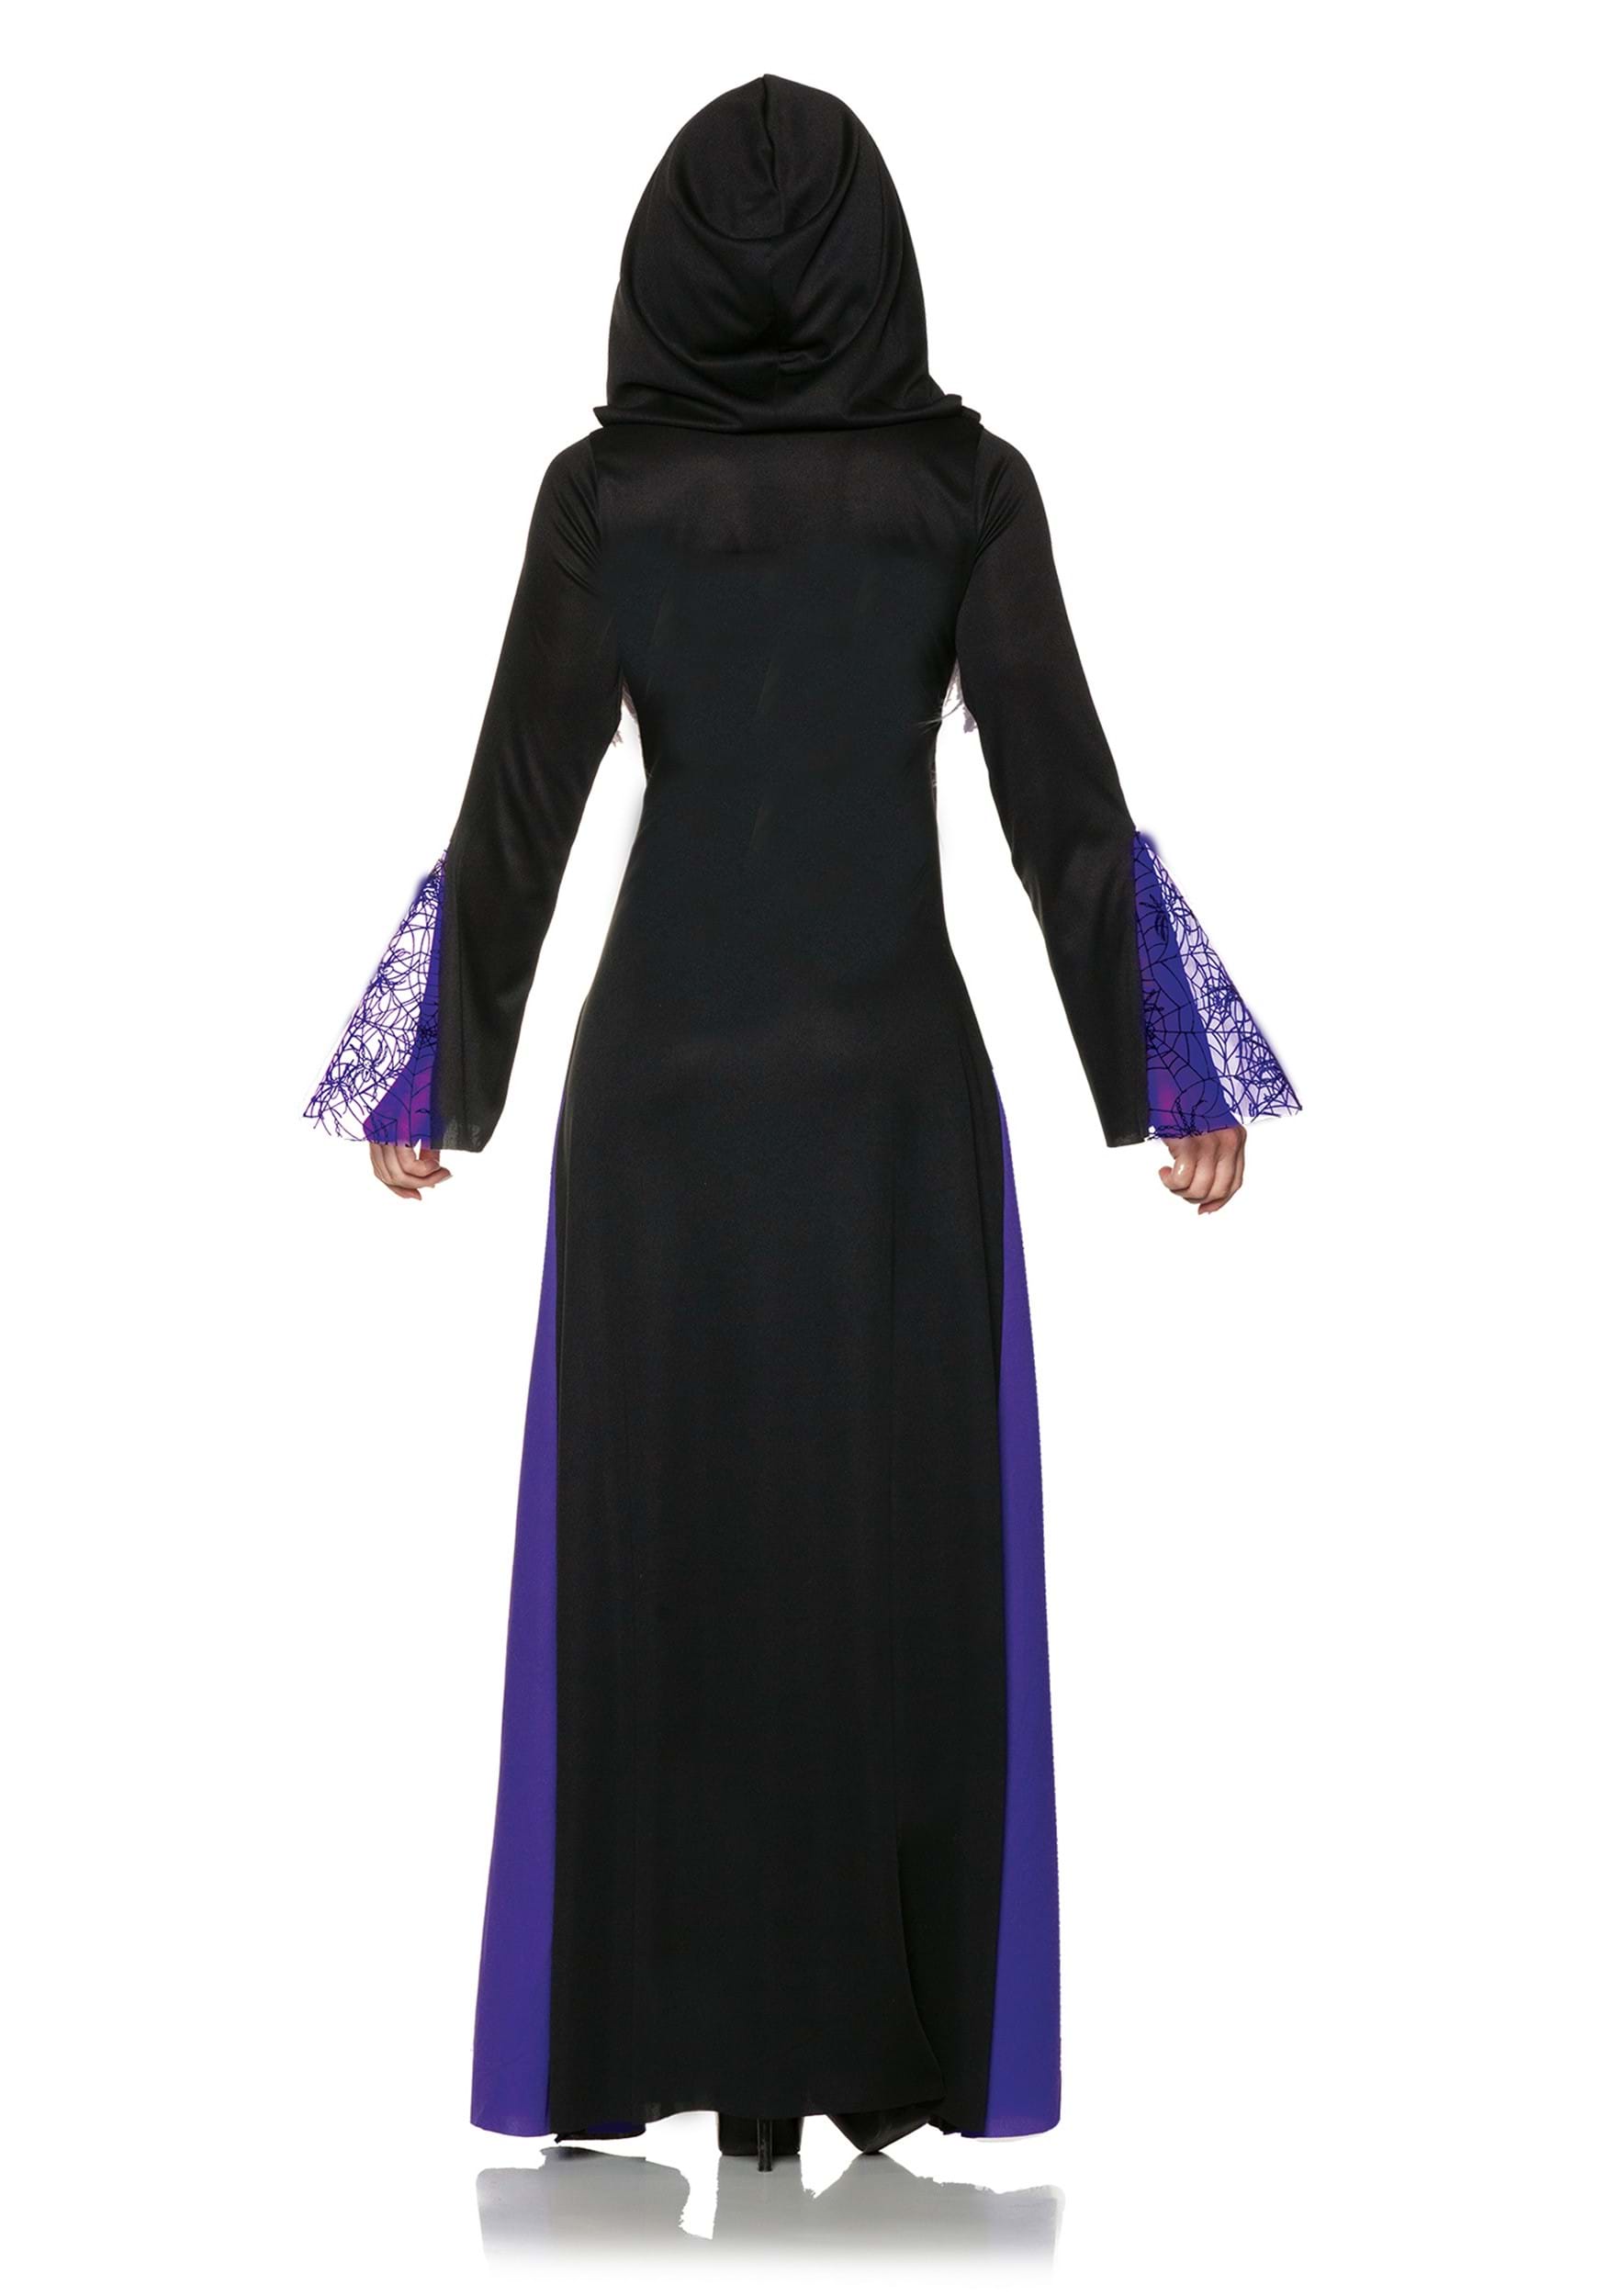 Mystic Witch Women's Adult Fancy Dress Costume